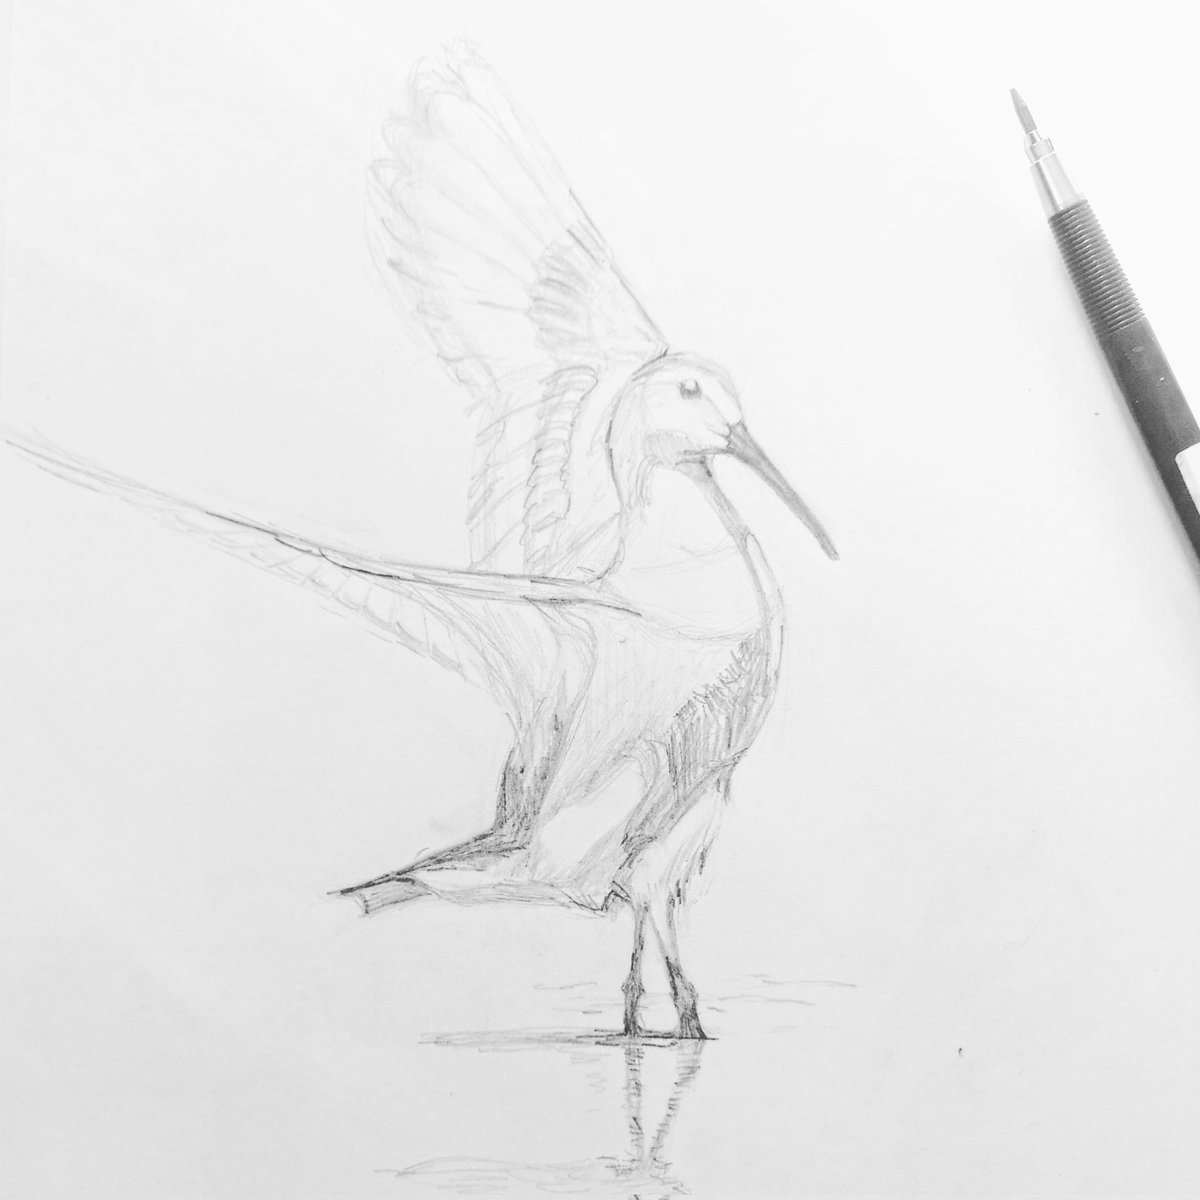 Dunlin sketch 
#artjournal #naturejournal #shorebirds #birds #pencil